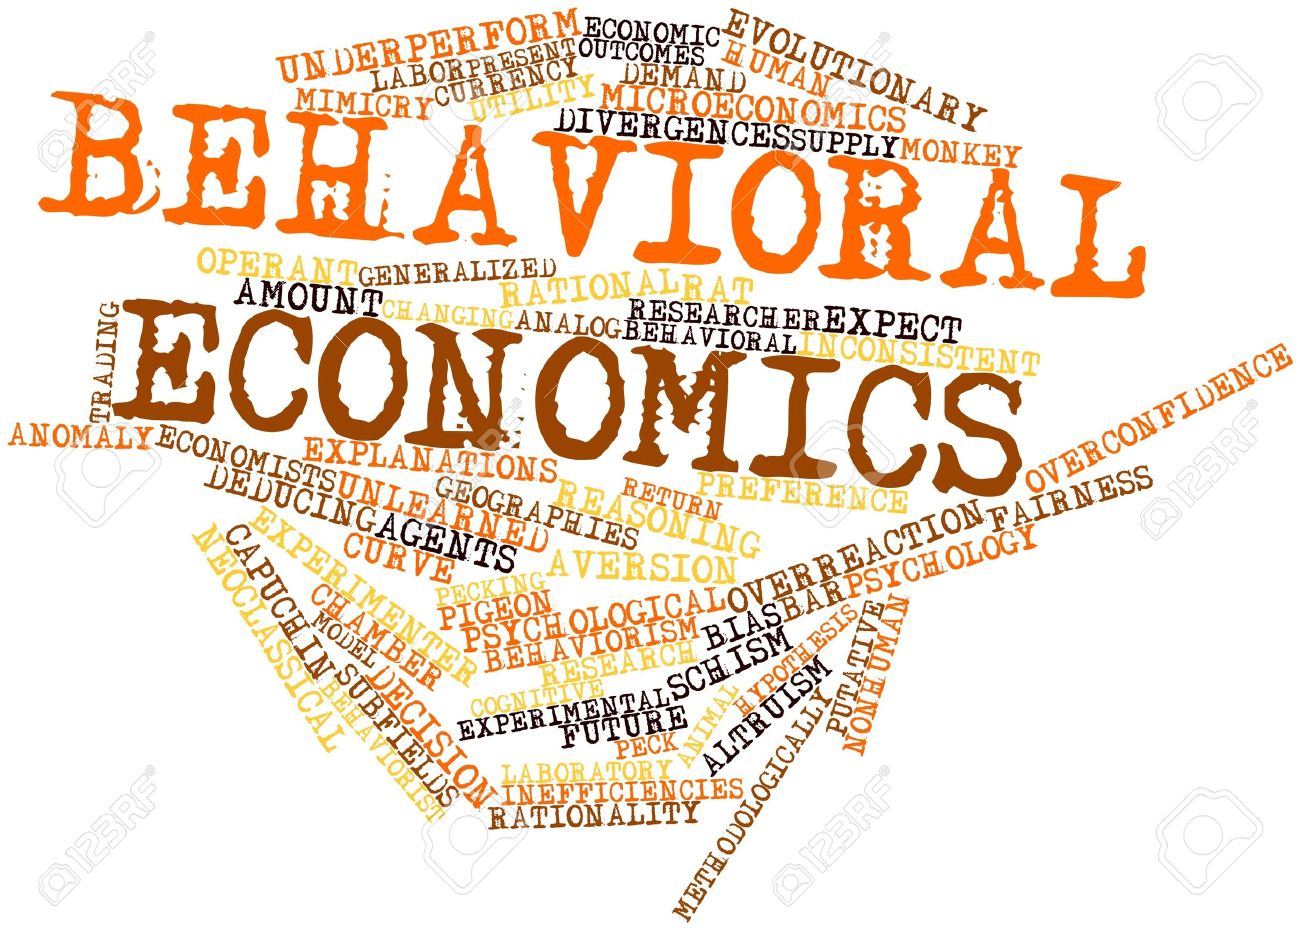 behavioral economics phd uk